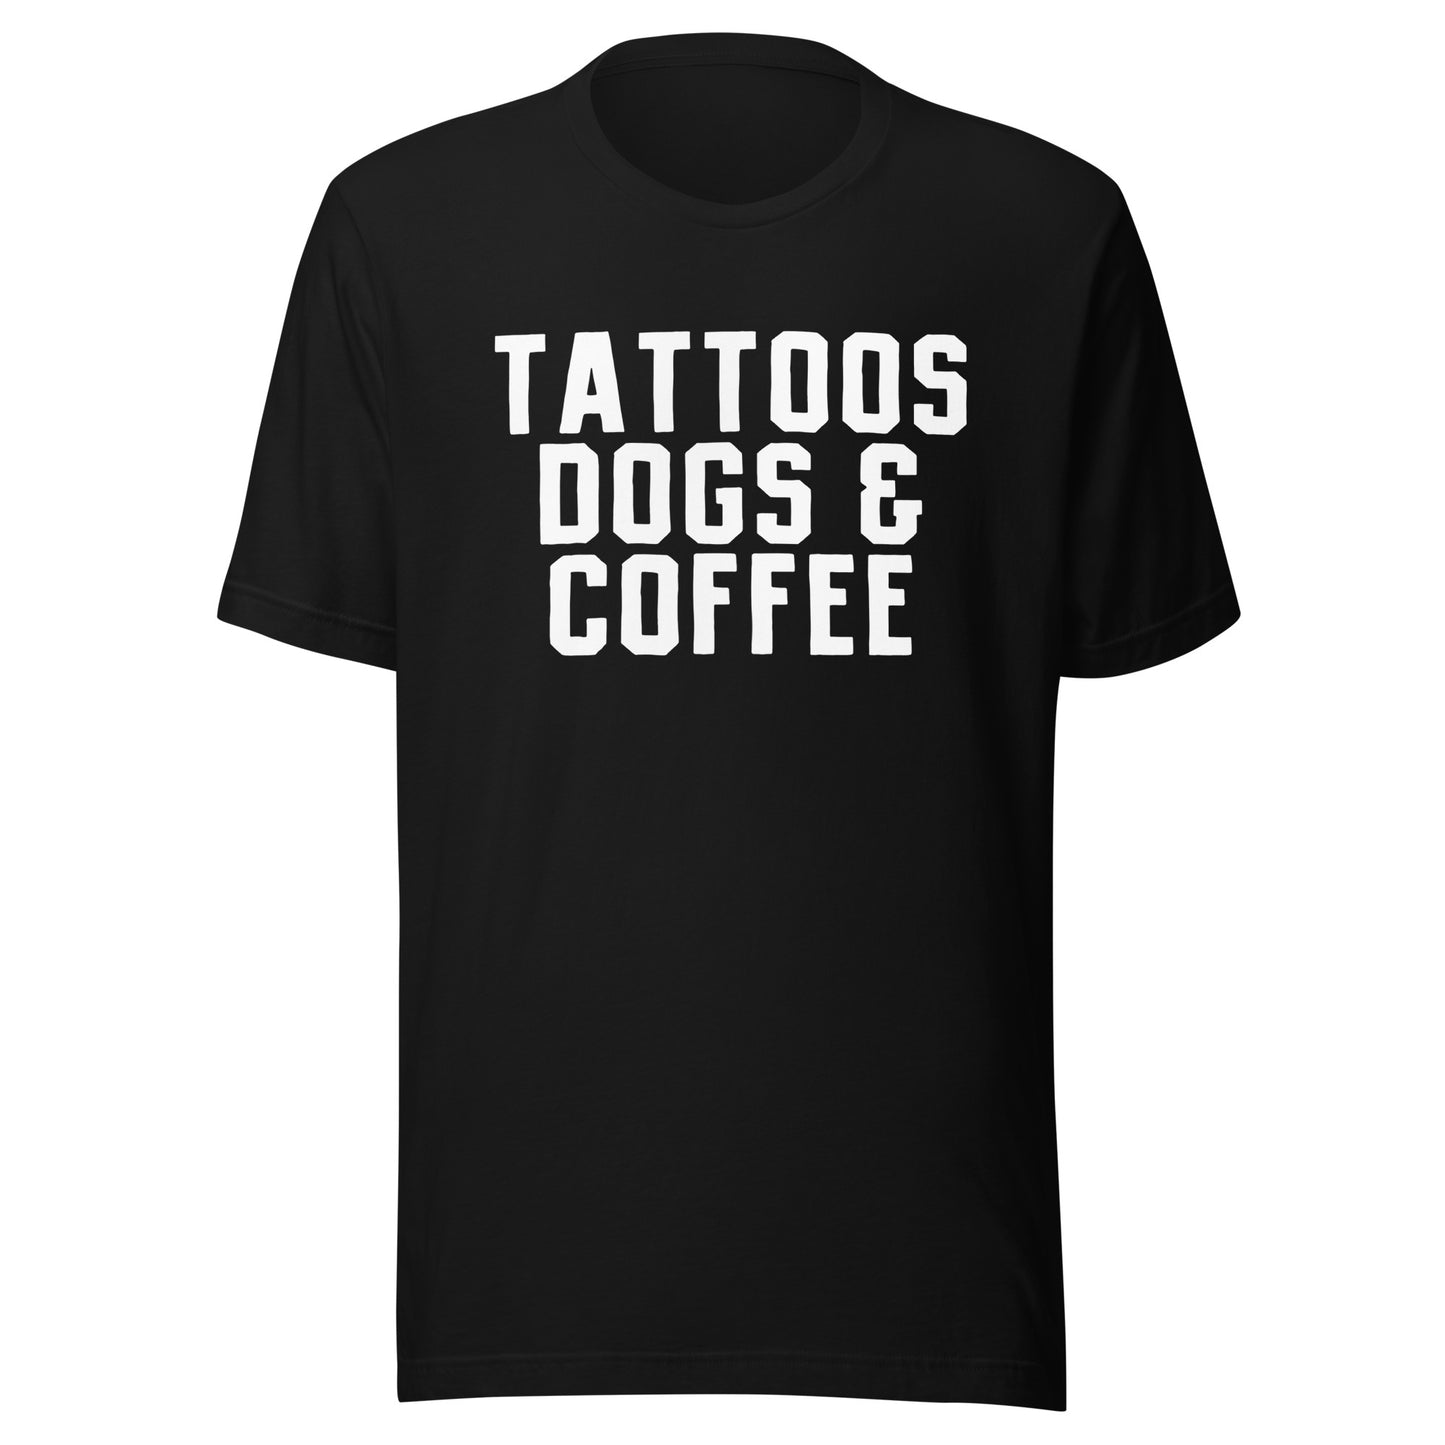 Tattoos, Dogs & Coffee Tee